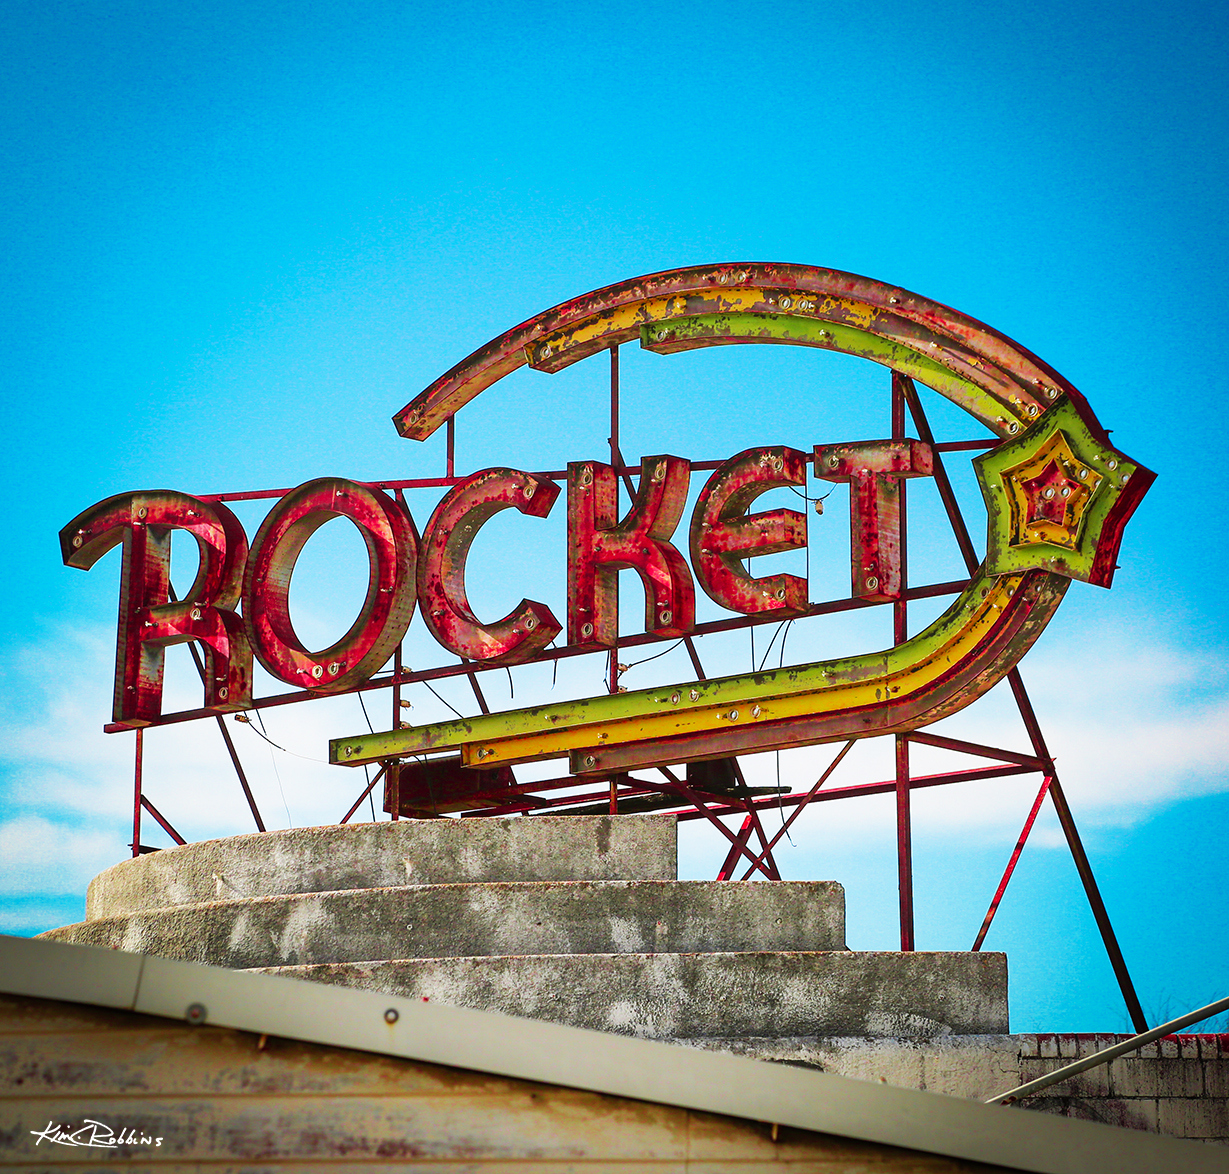 The Rocket #2